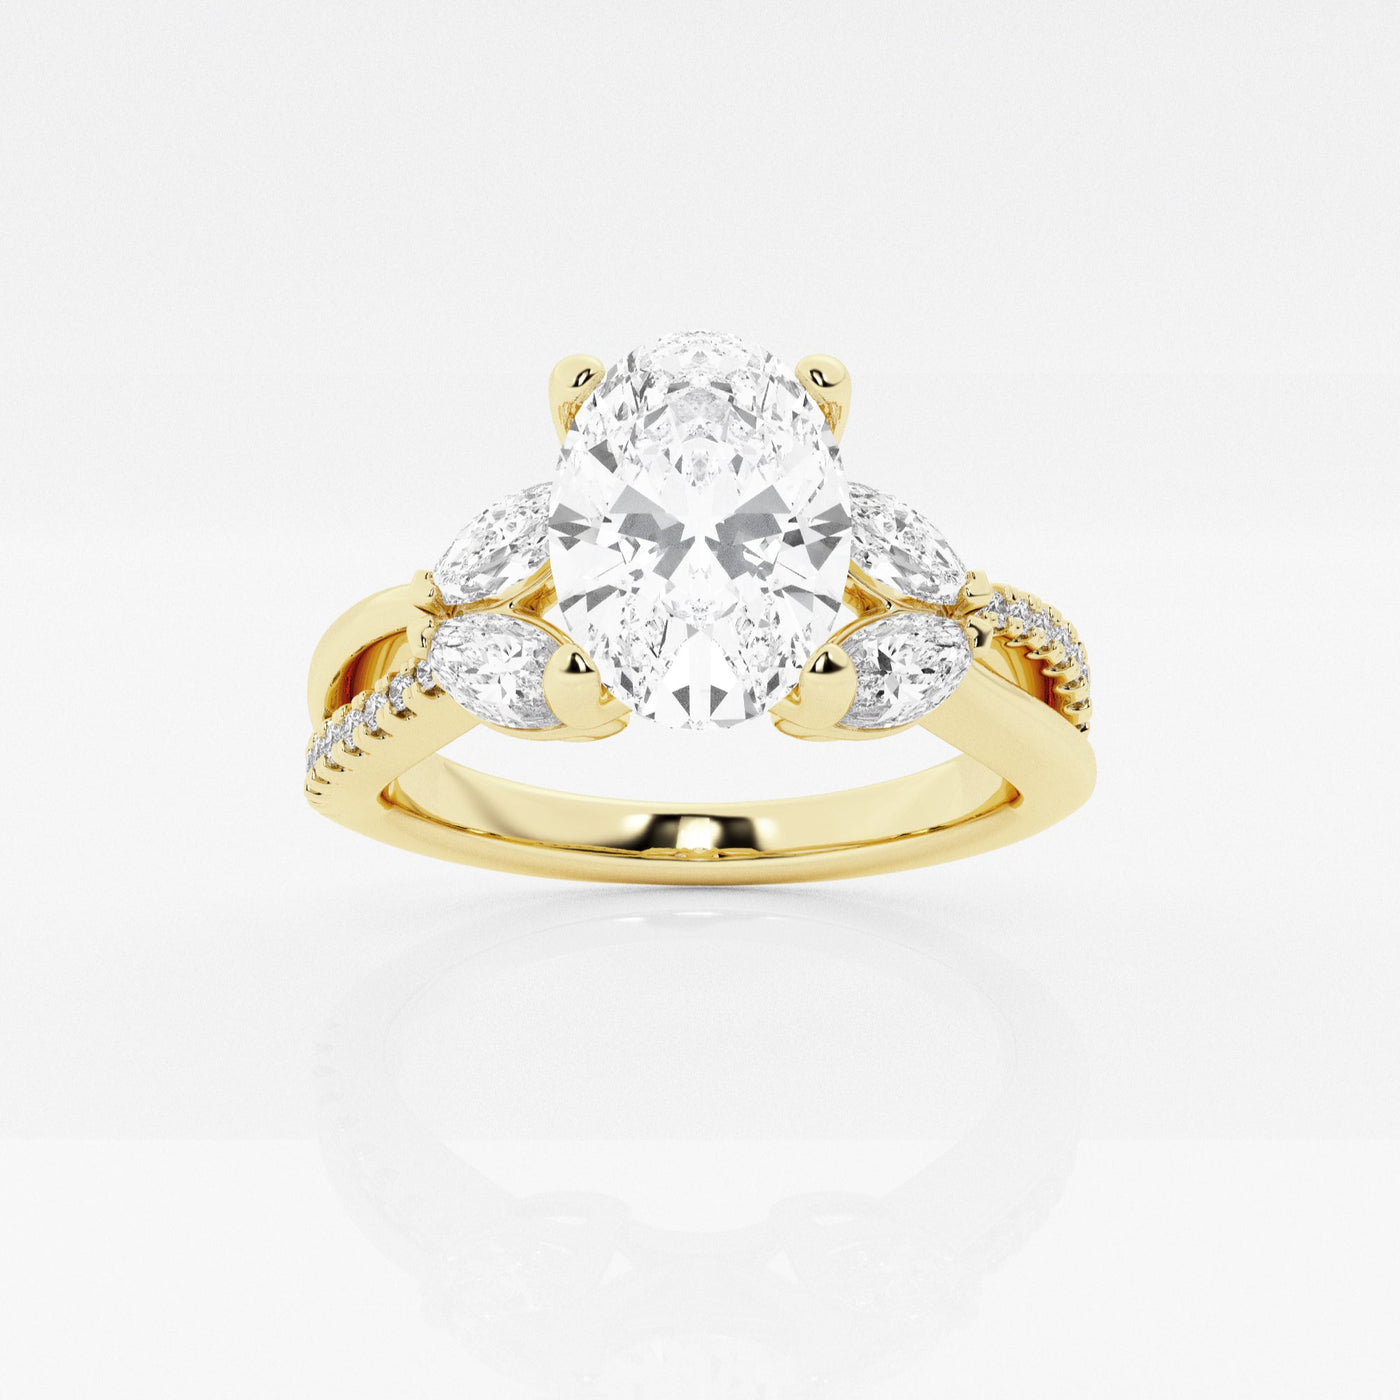 _main_image@SKU:LGR1613X1O075SOGY4~#carat_1.08#diamond-quality_fg,-vs2+#metal_18k-yellow-gold